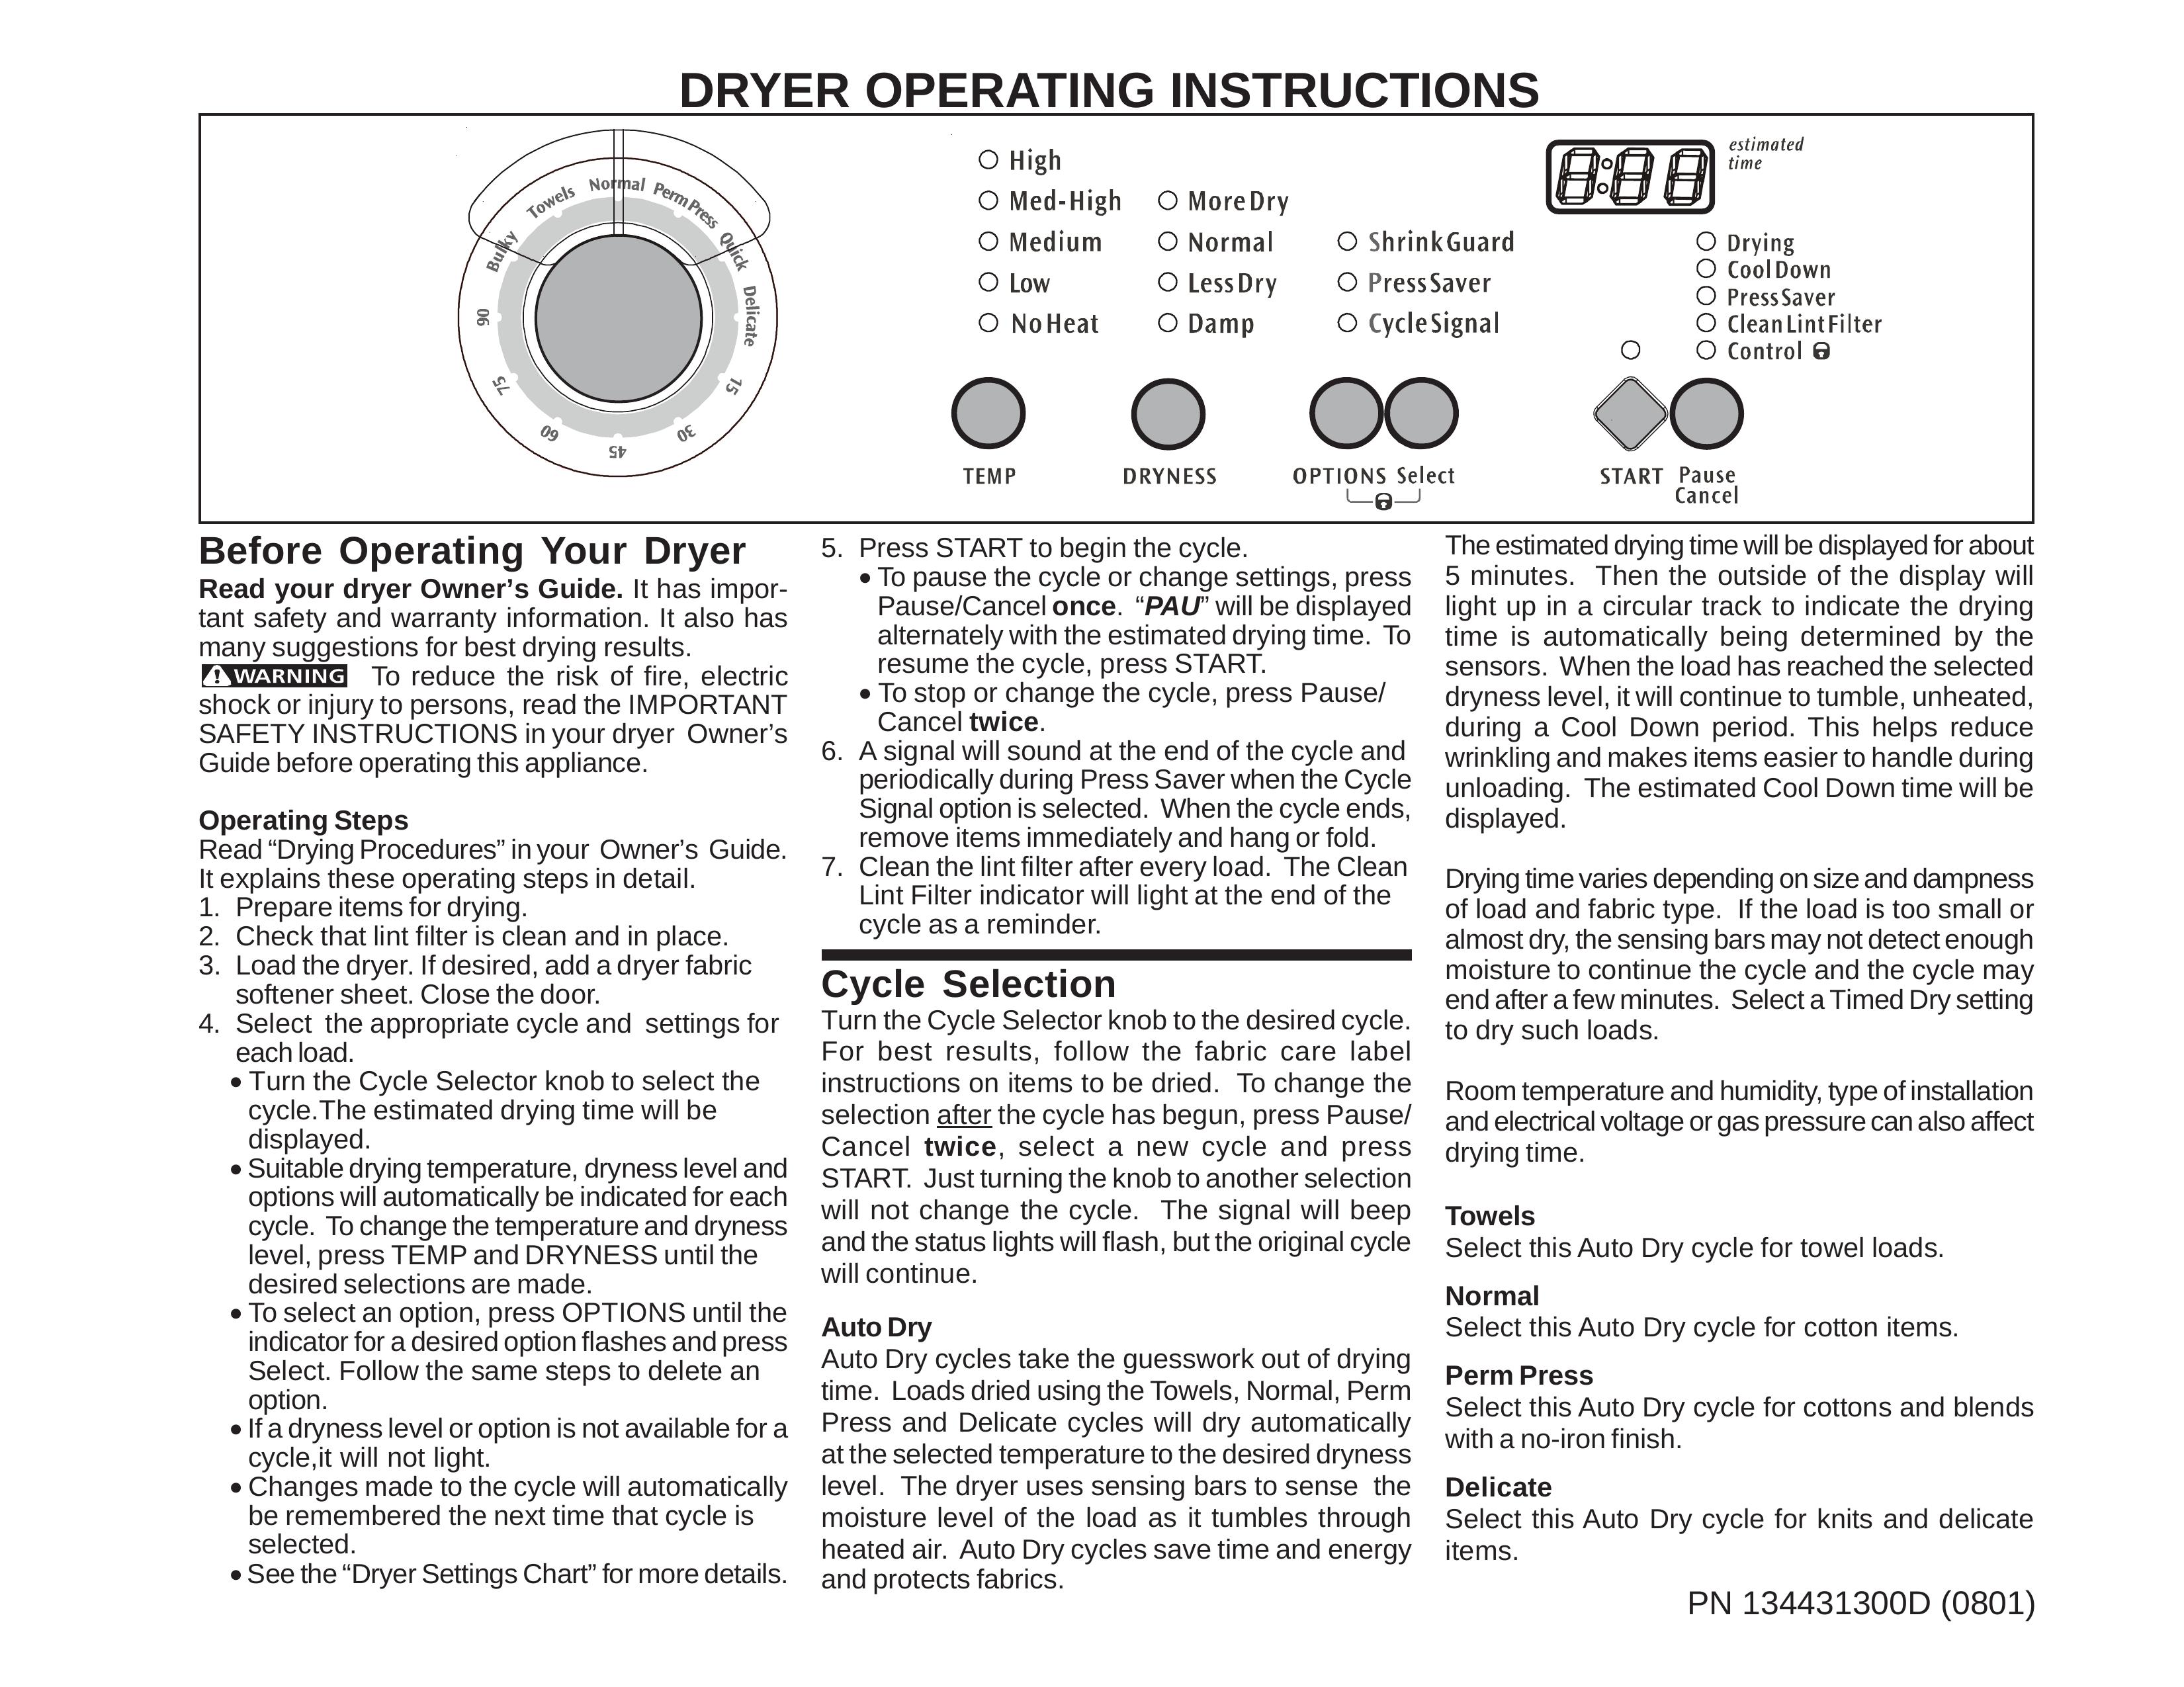 Frigidaire 134431300D Clothes Dryer User Manual